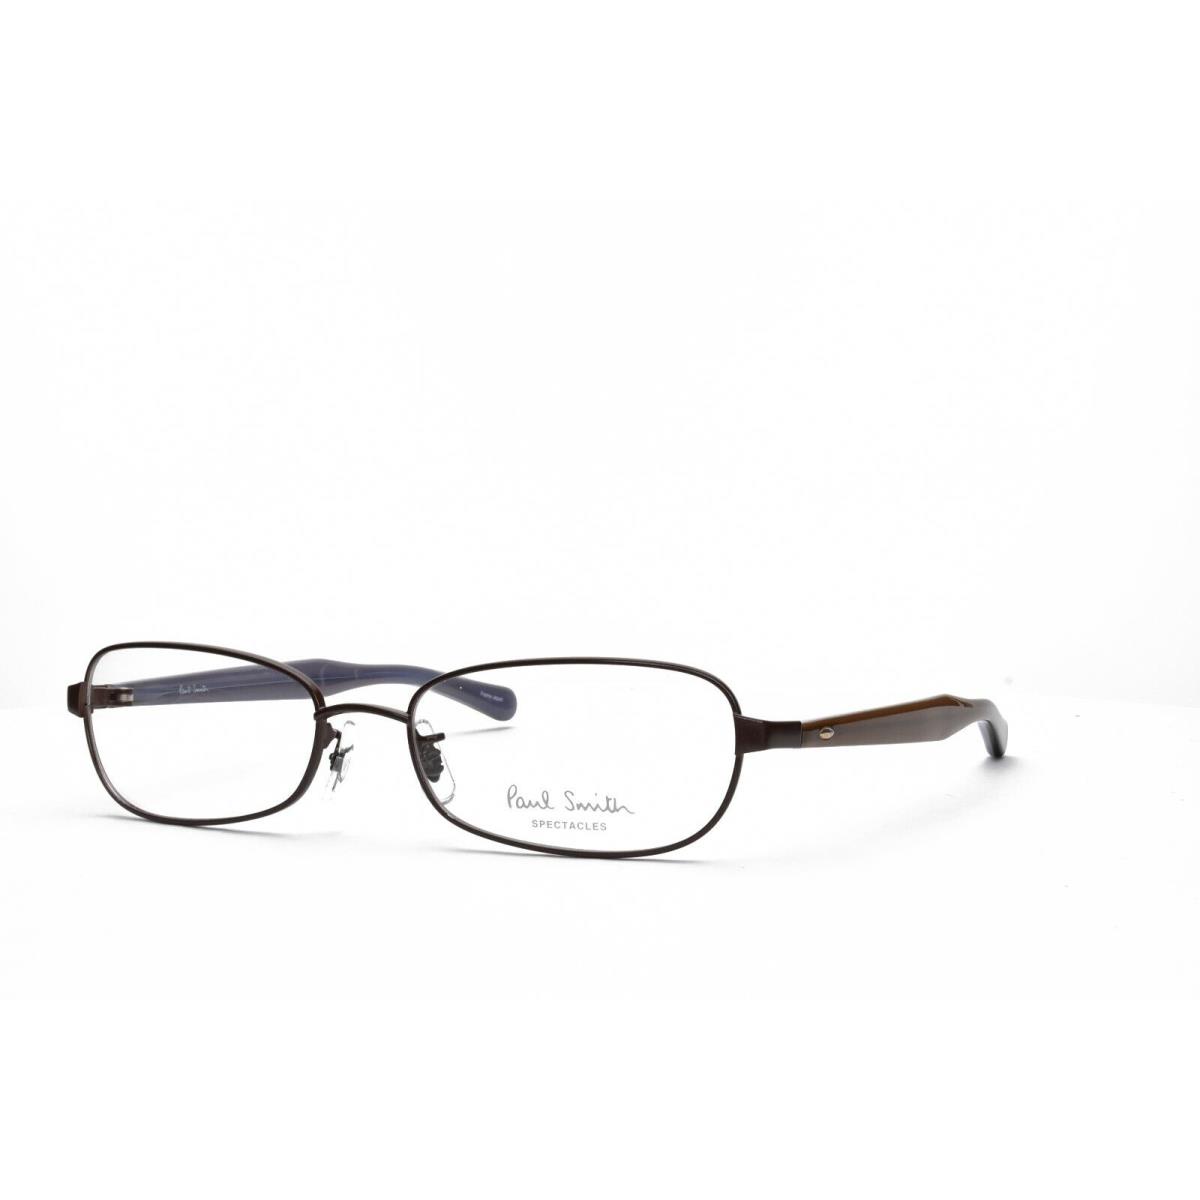 Paul Smith PS 1008 Cho/umpw Eyeglasses Frames Only 51-17-130